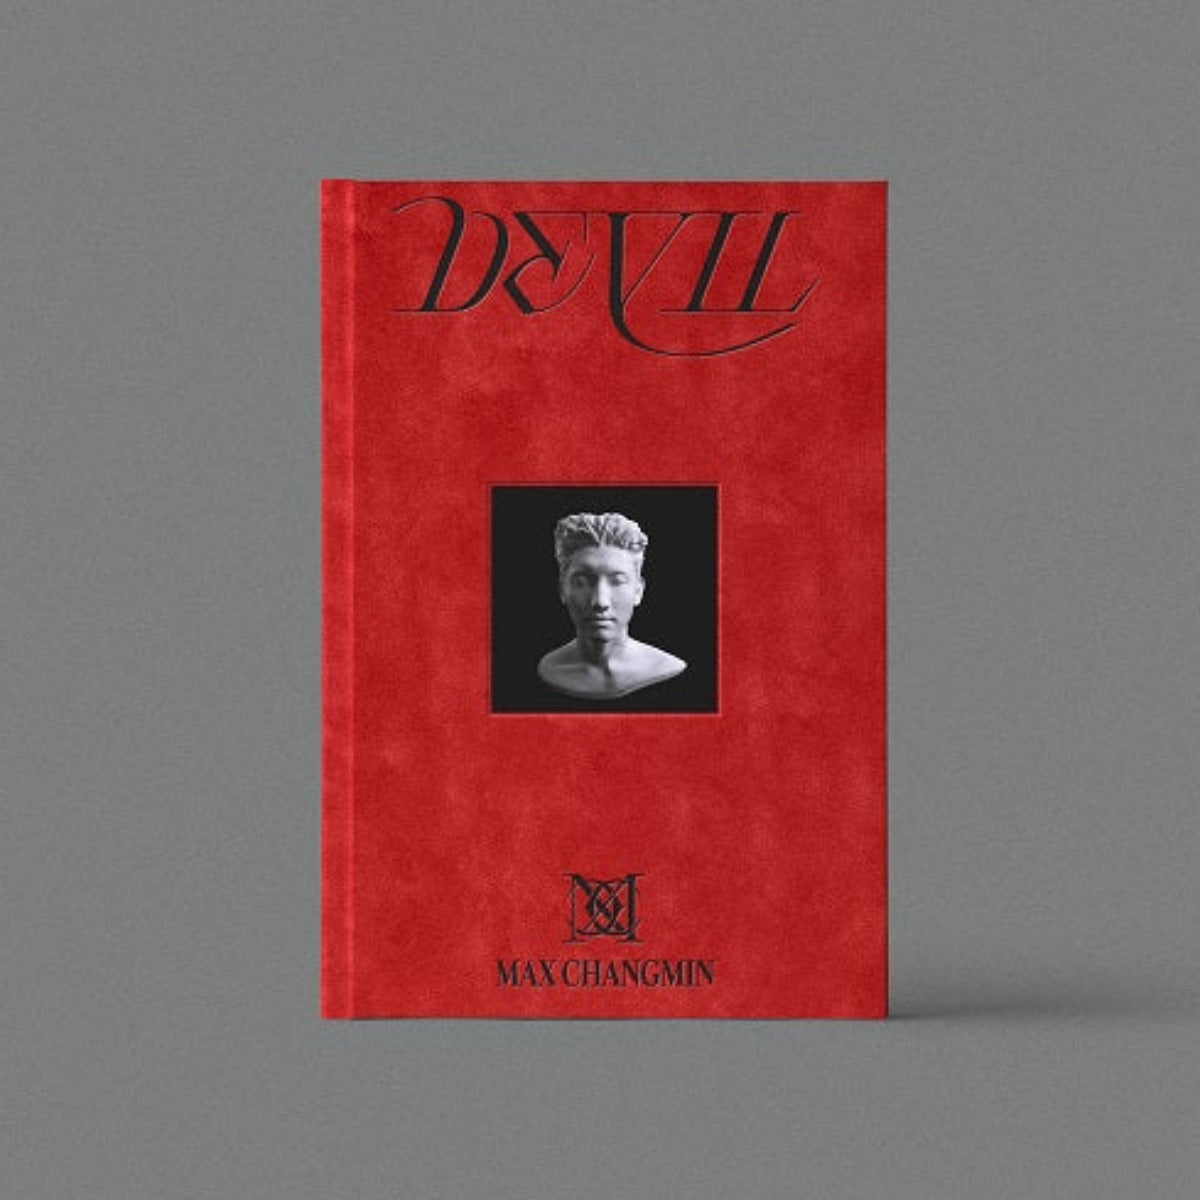 TVXQ!: Max Chang Min Mini Album Vol. 2 - Devil